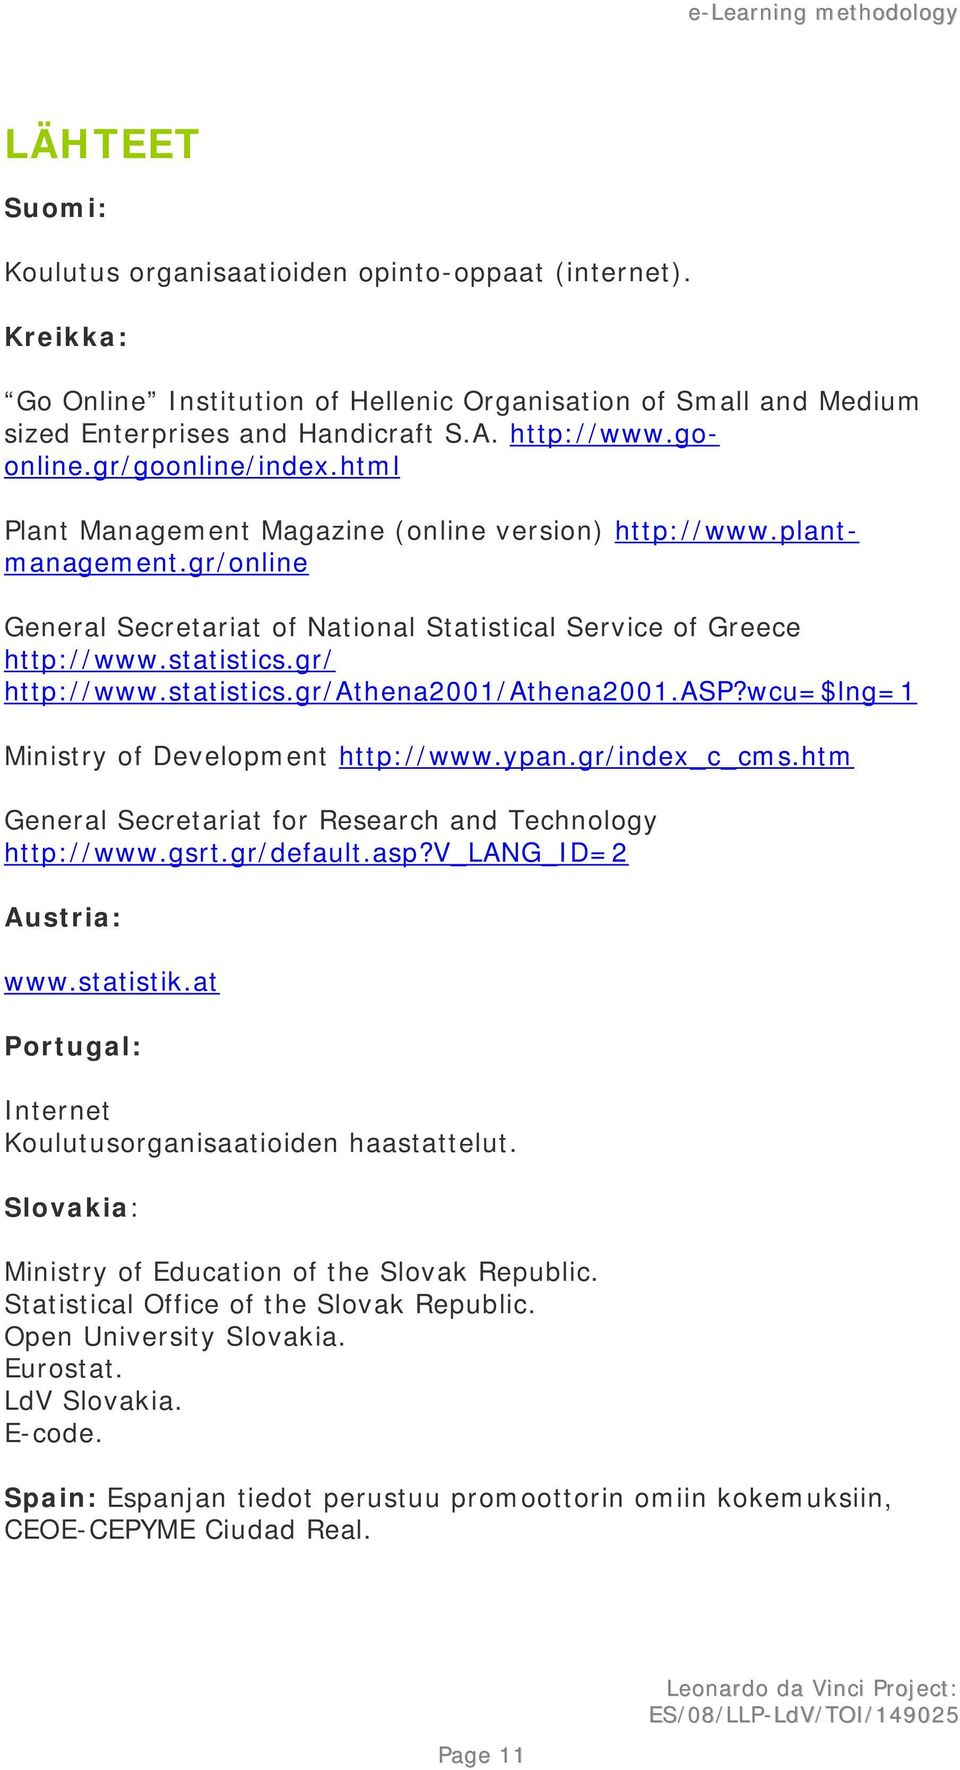 gr/ http://www.statistics.gr/athena2001/athena2001.asp?wcu=$lng=1 Ministry of Development http://www.ypan.gr/index_c_cms.htm General Secretariat for Research and Technology http://www.gsrt.gr/default.